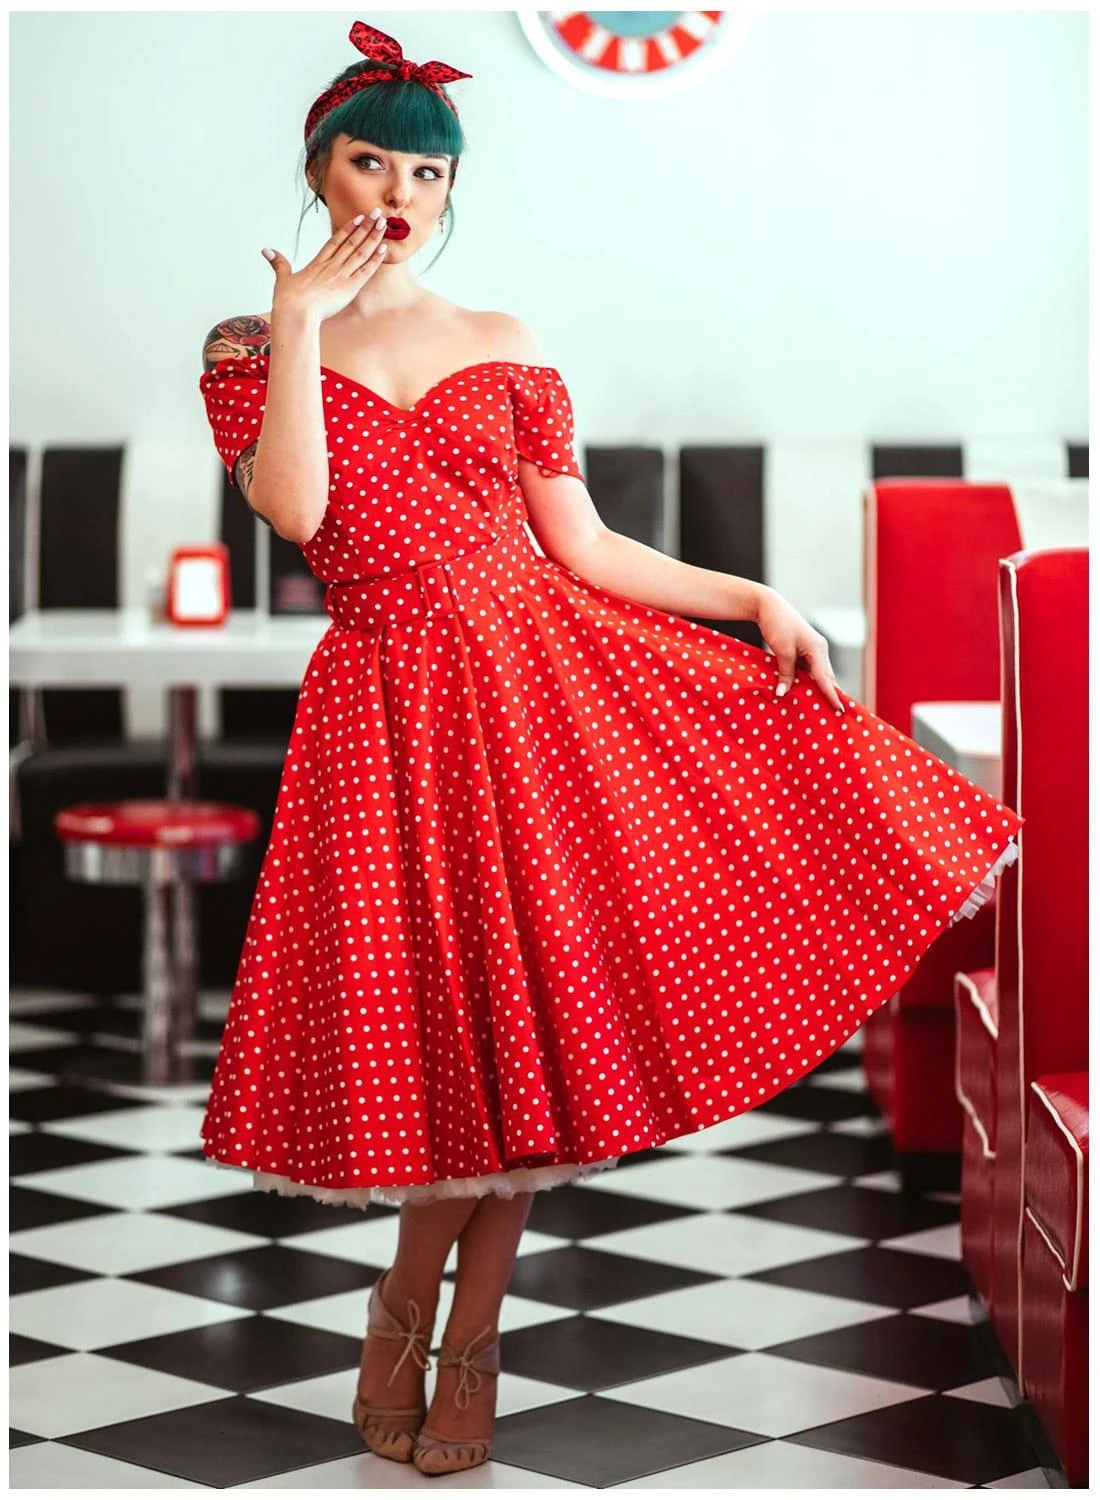 schrobben vergroting chrysant 30 zomer vrouwen vintage 50's polka dot cirkel swing jurk in rood plus size  jurken rockabilly vestidos pin up jurken|Jurken| - AliExpress